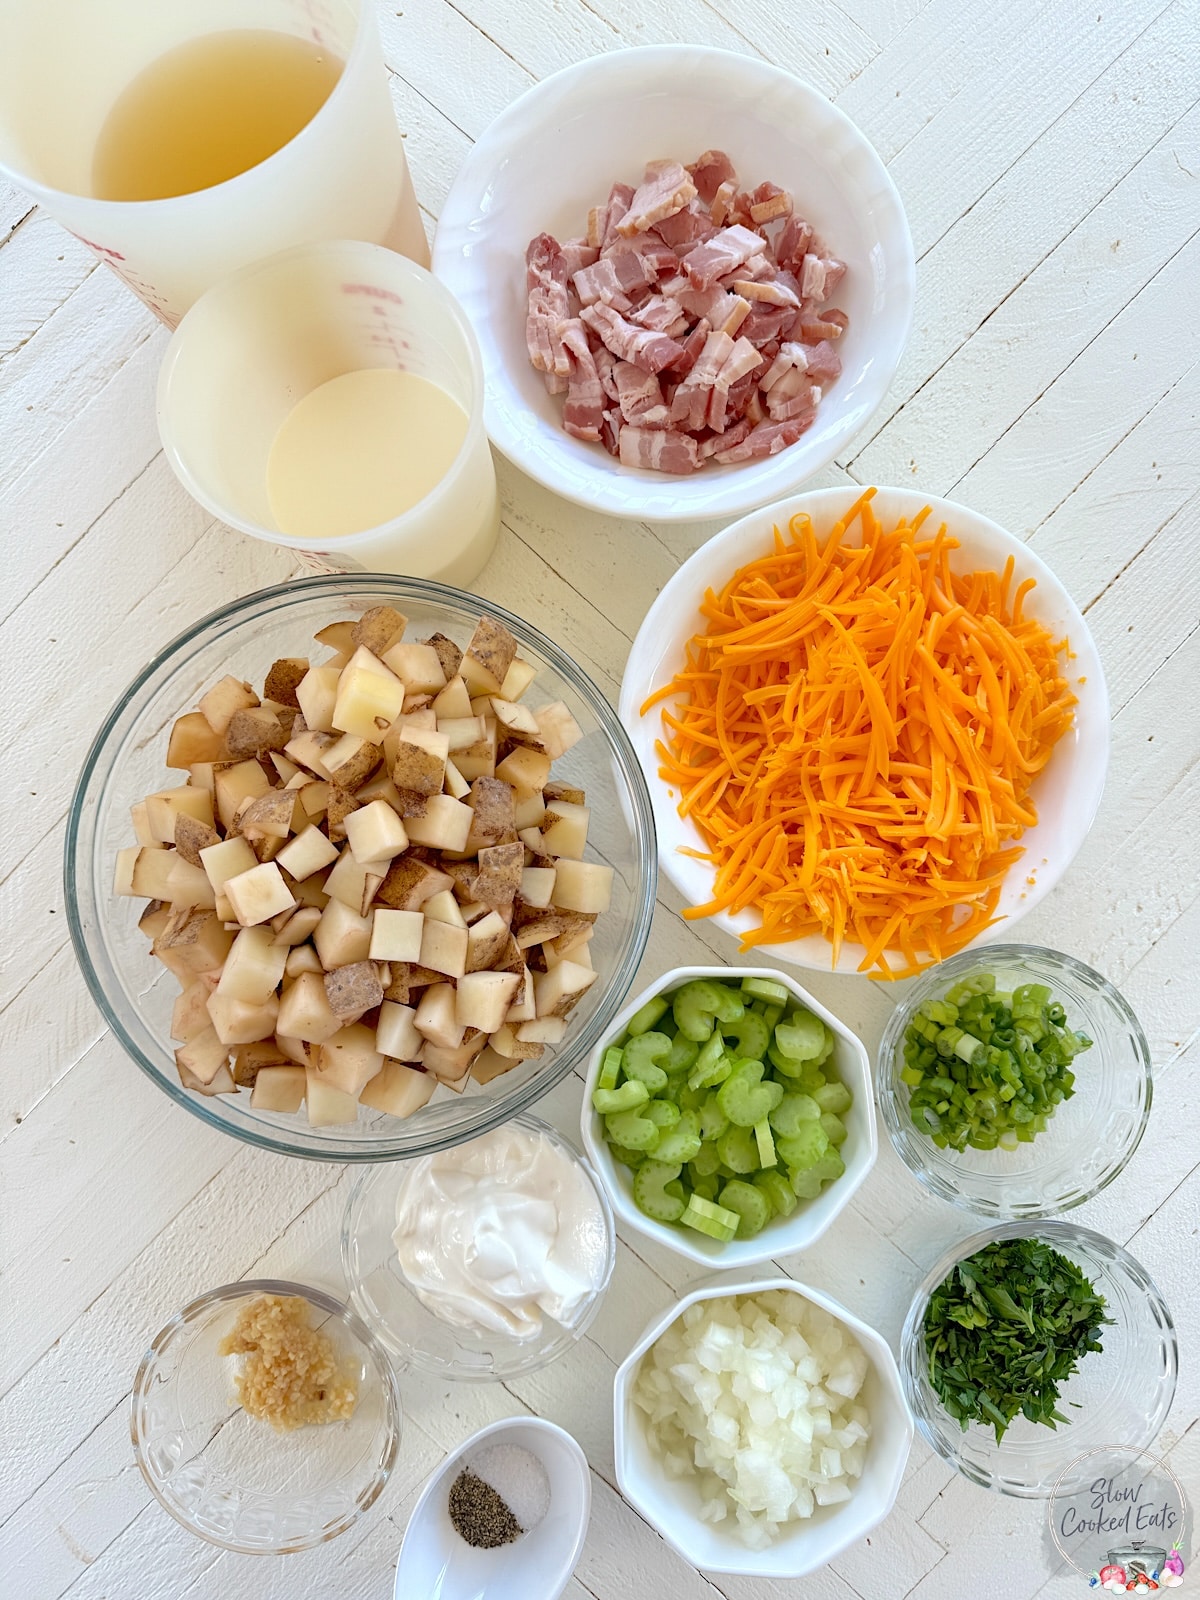 Ingredients for making loaded potato soup in crockpot.